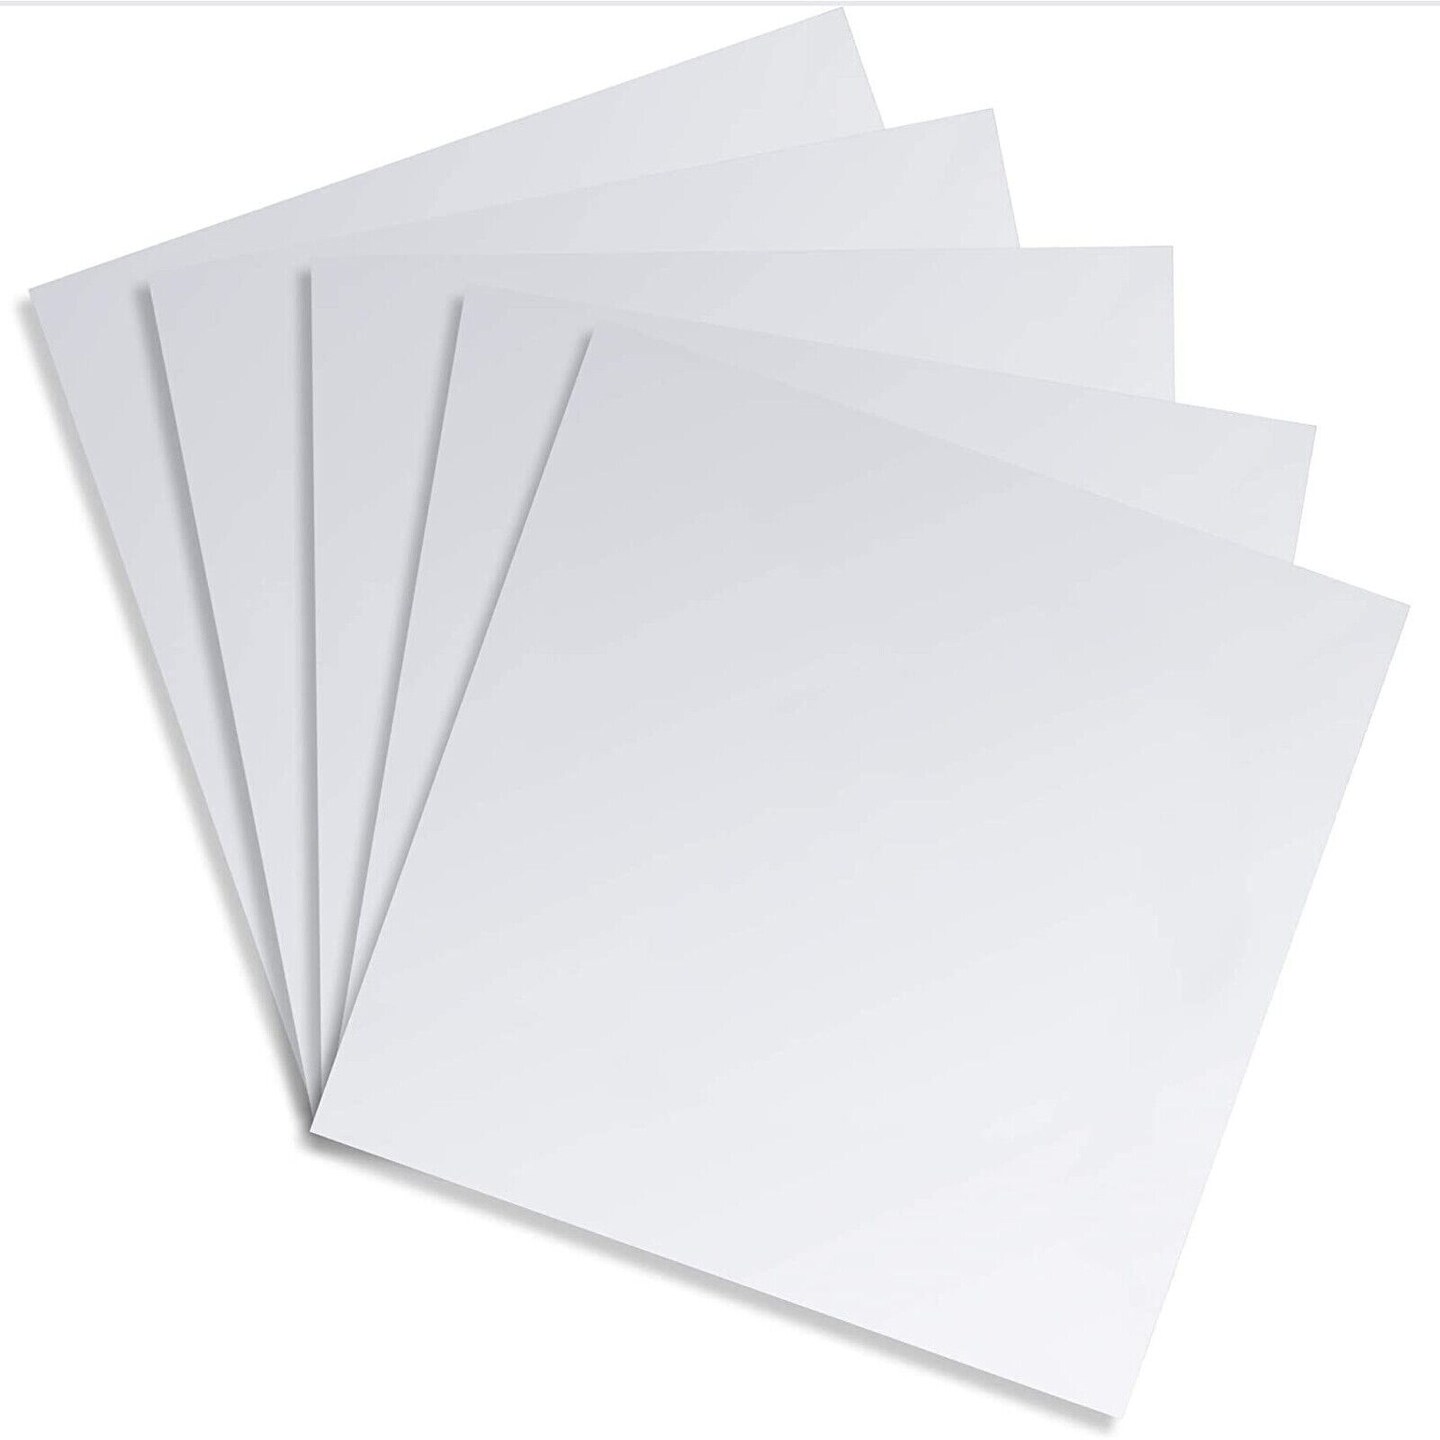 Silver mirror acrylic sheet - Premium Quality